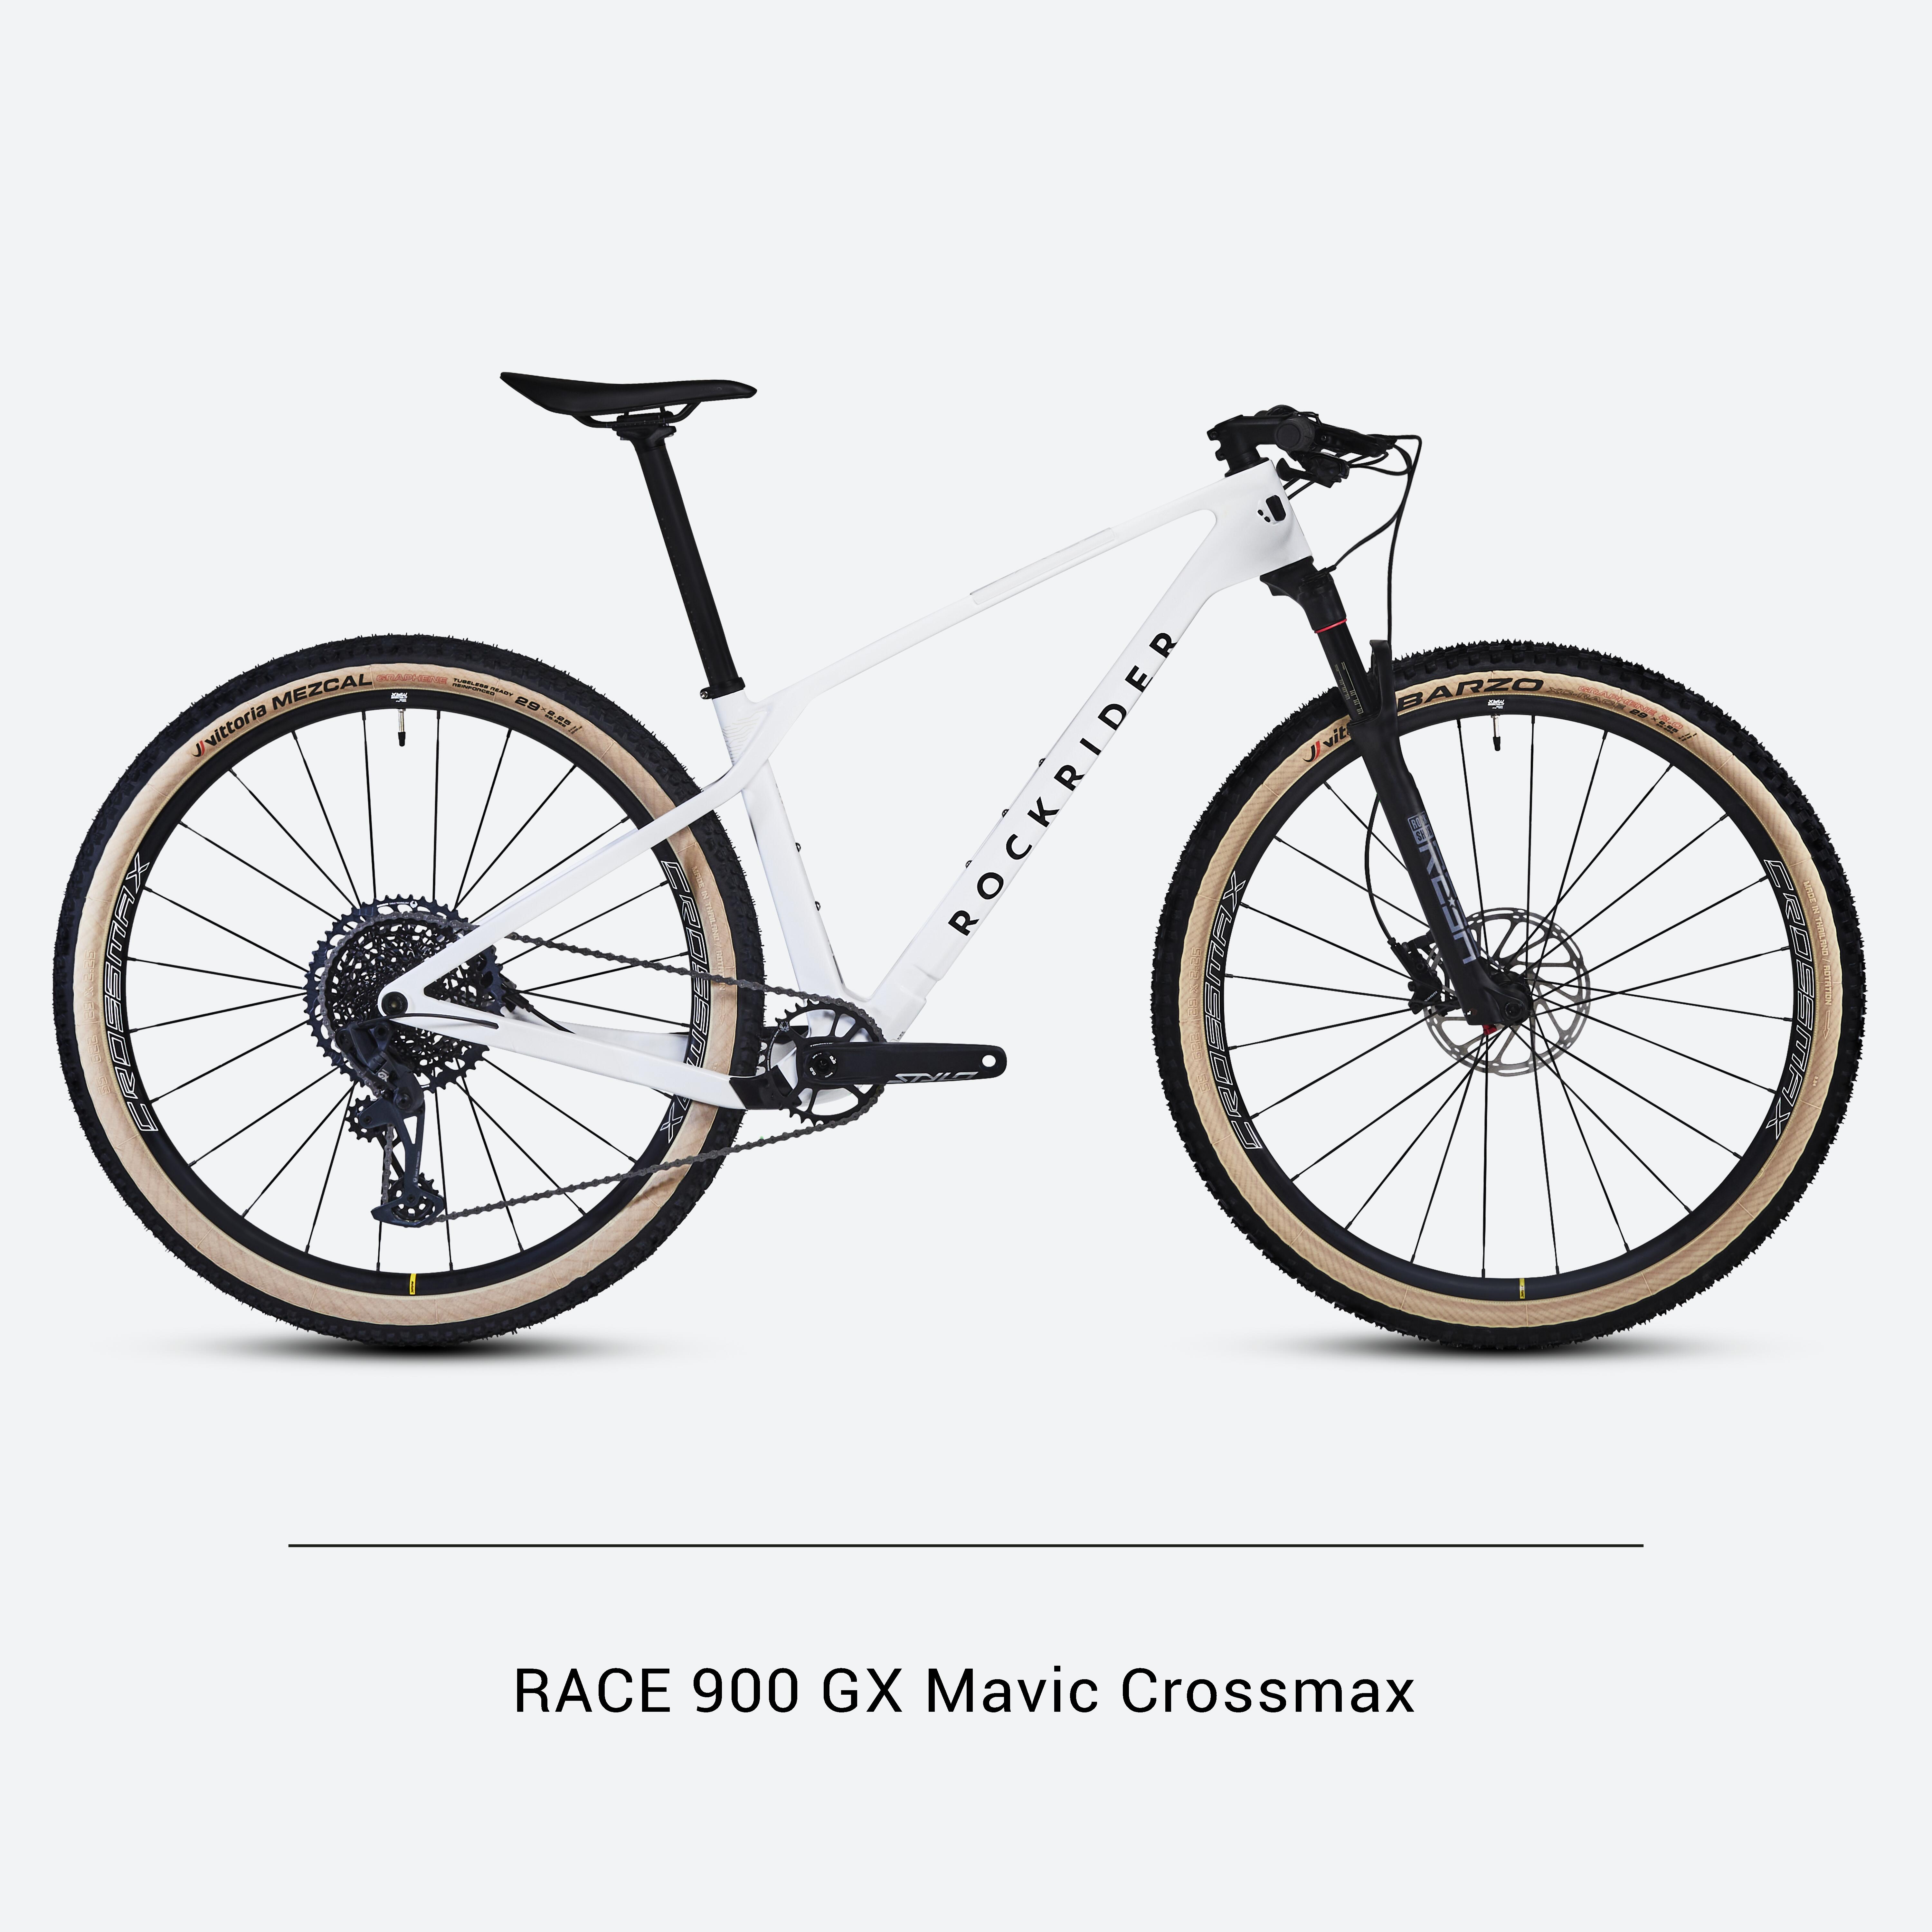 BICICLETÄ‚ MTB cross country RACE 900 GX Eagle, roÈ›i Mavic Crossmax, cadru carbon